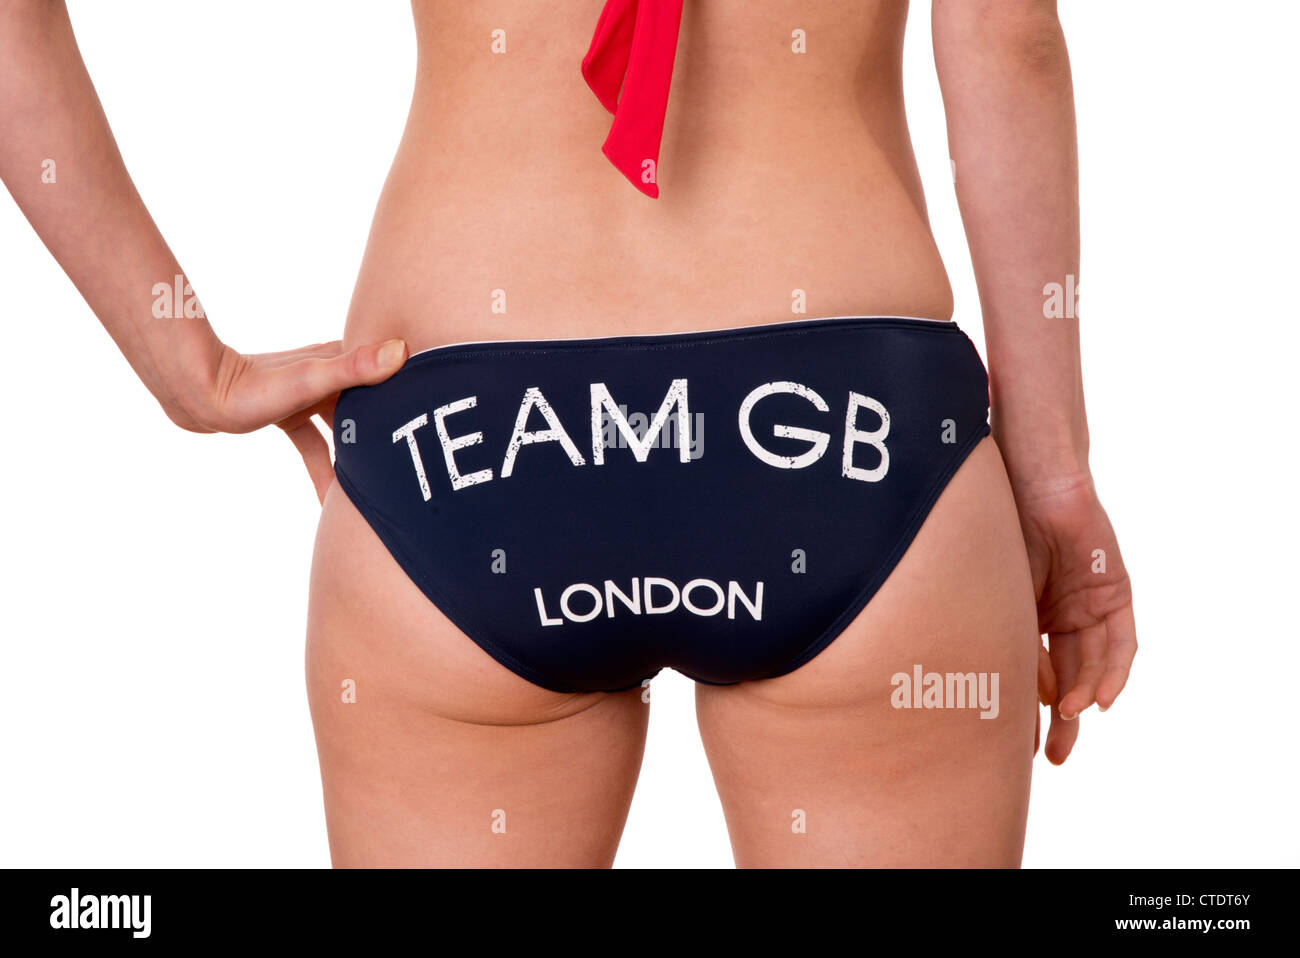 Team GB London Olympics volleyball bikini Stock Photo